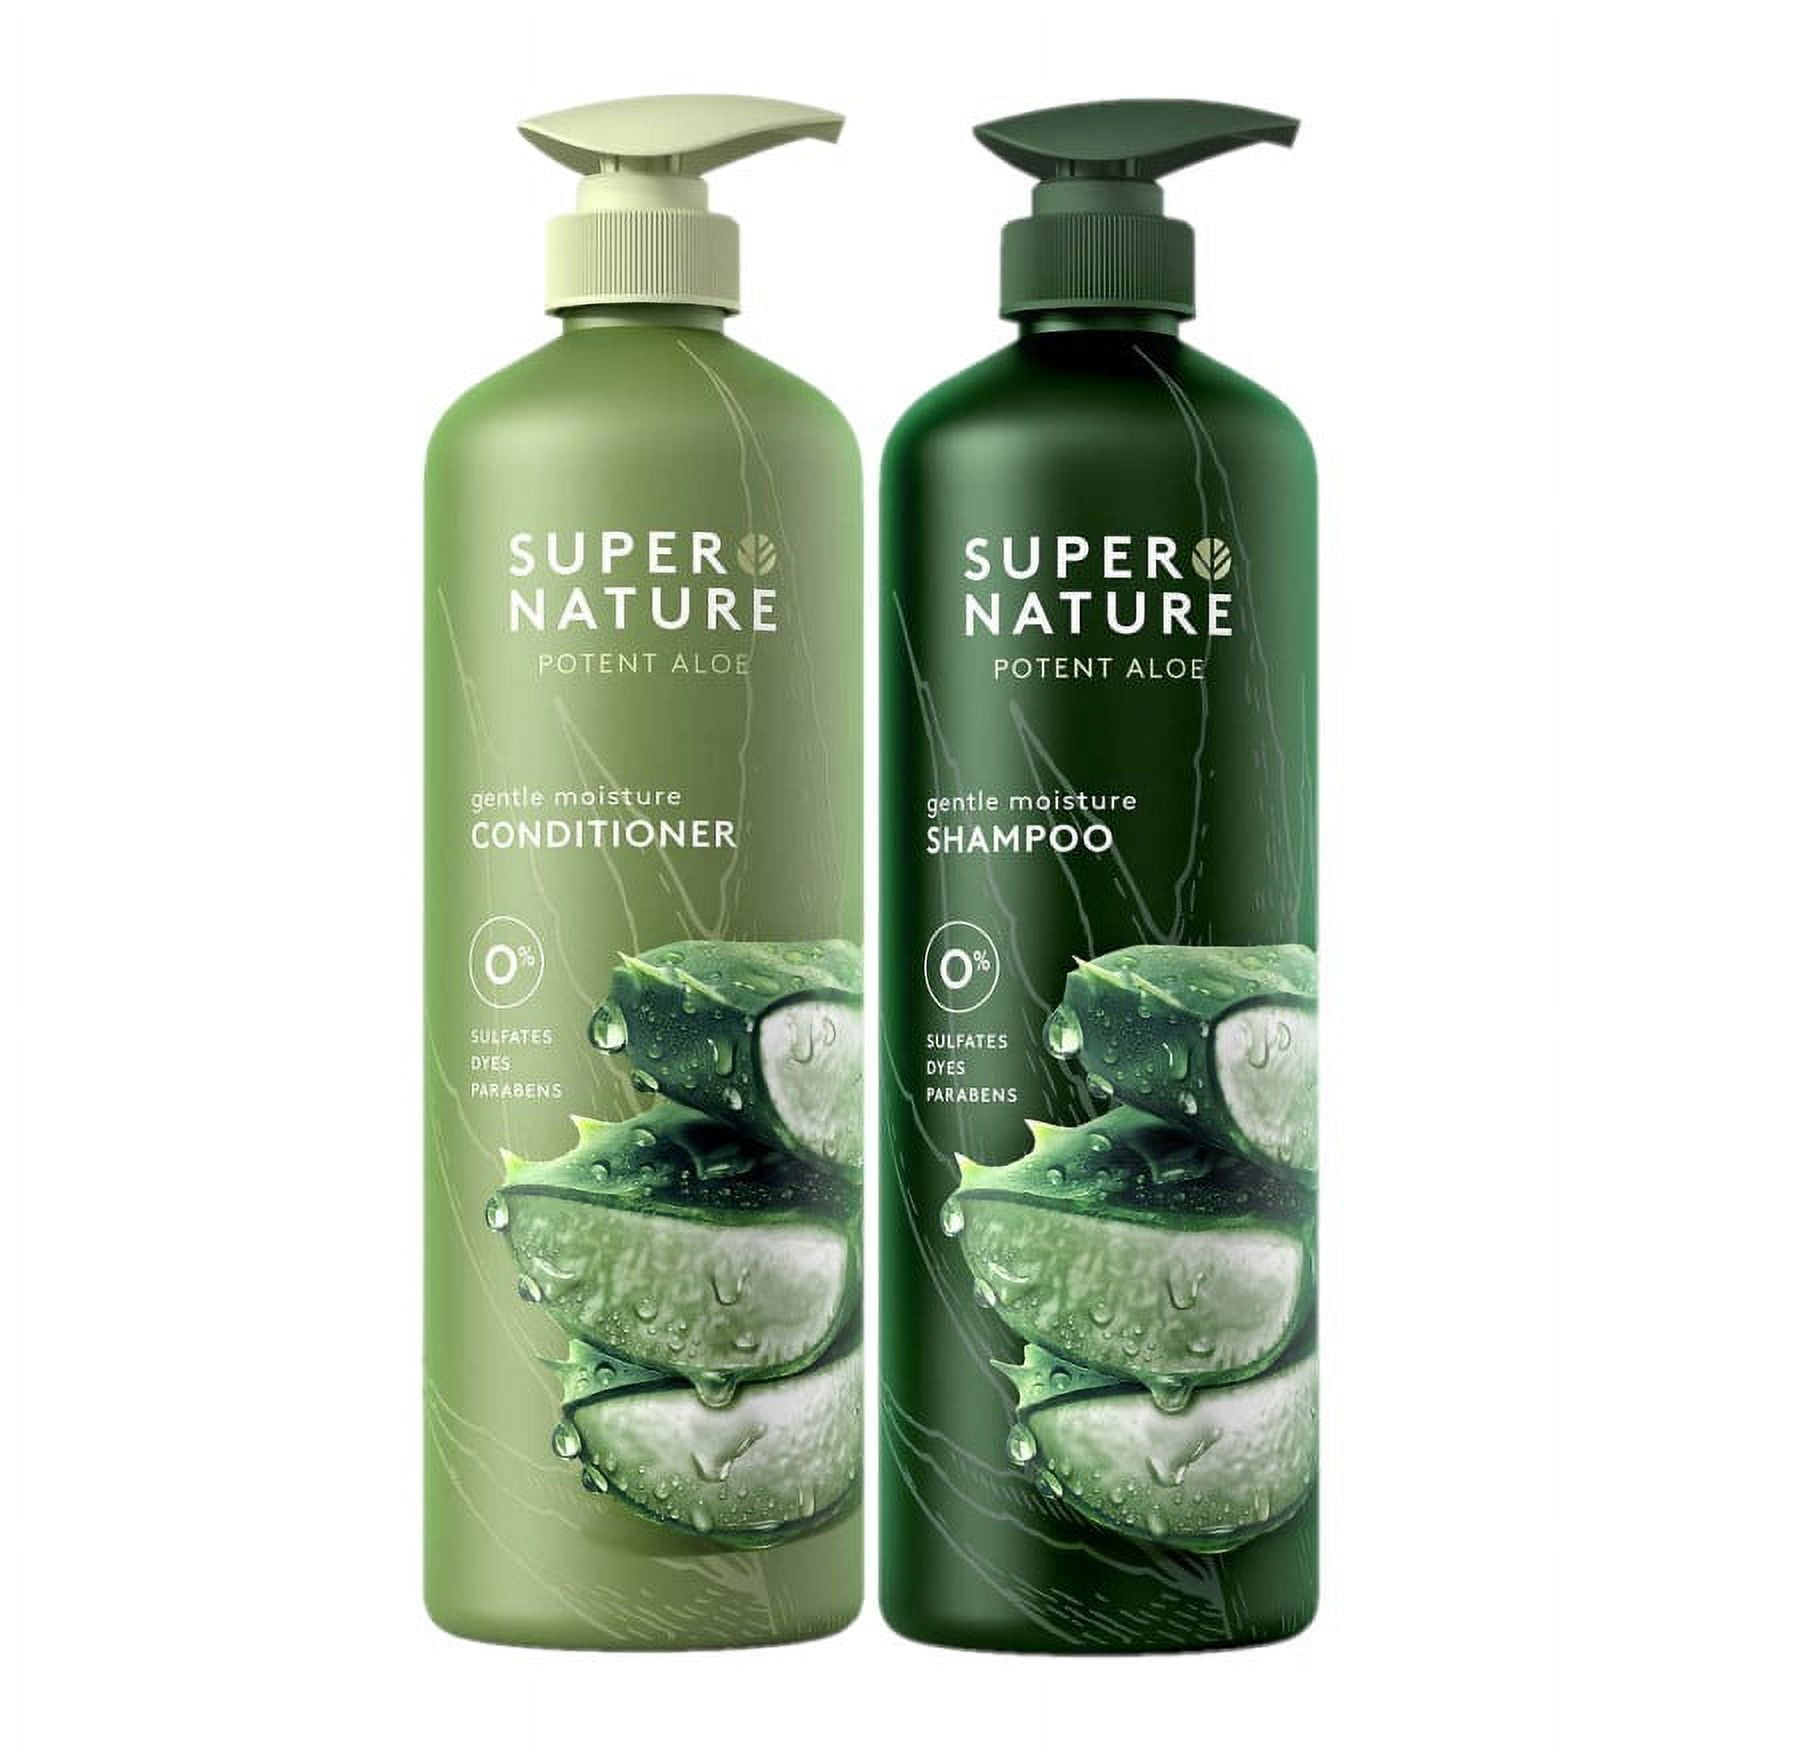 Super Nature Potent Aloe Moisturizing Shampoo and Conditioner, 30 fl oz